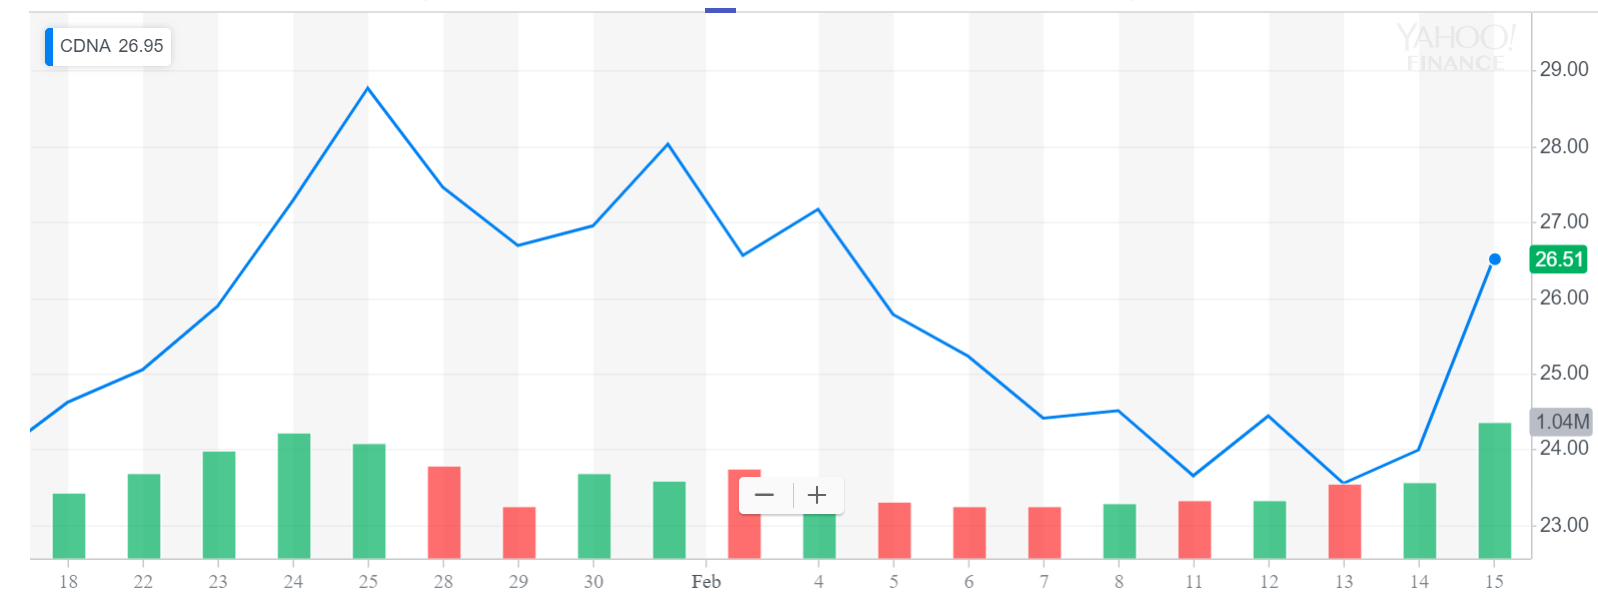 Yahoo Finance Interactive Stock Chart